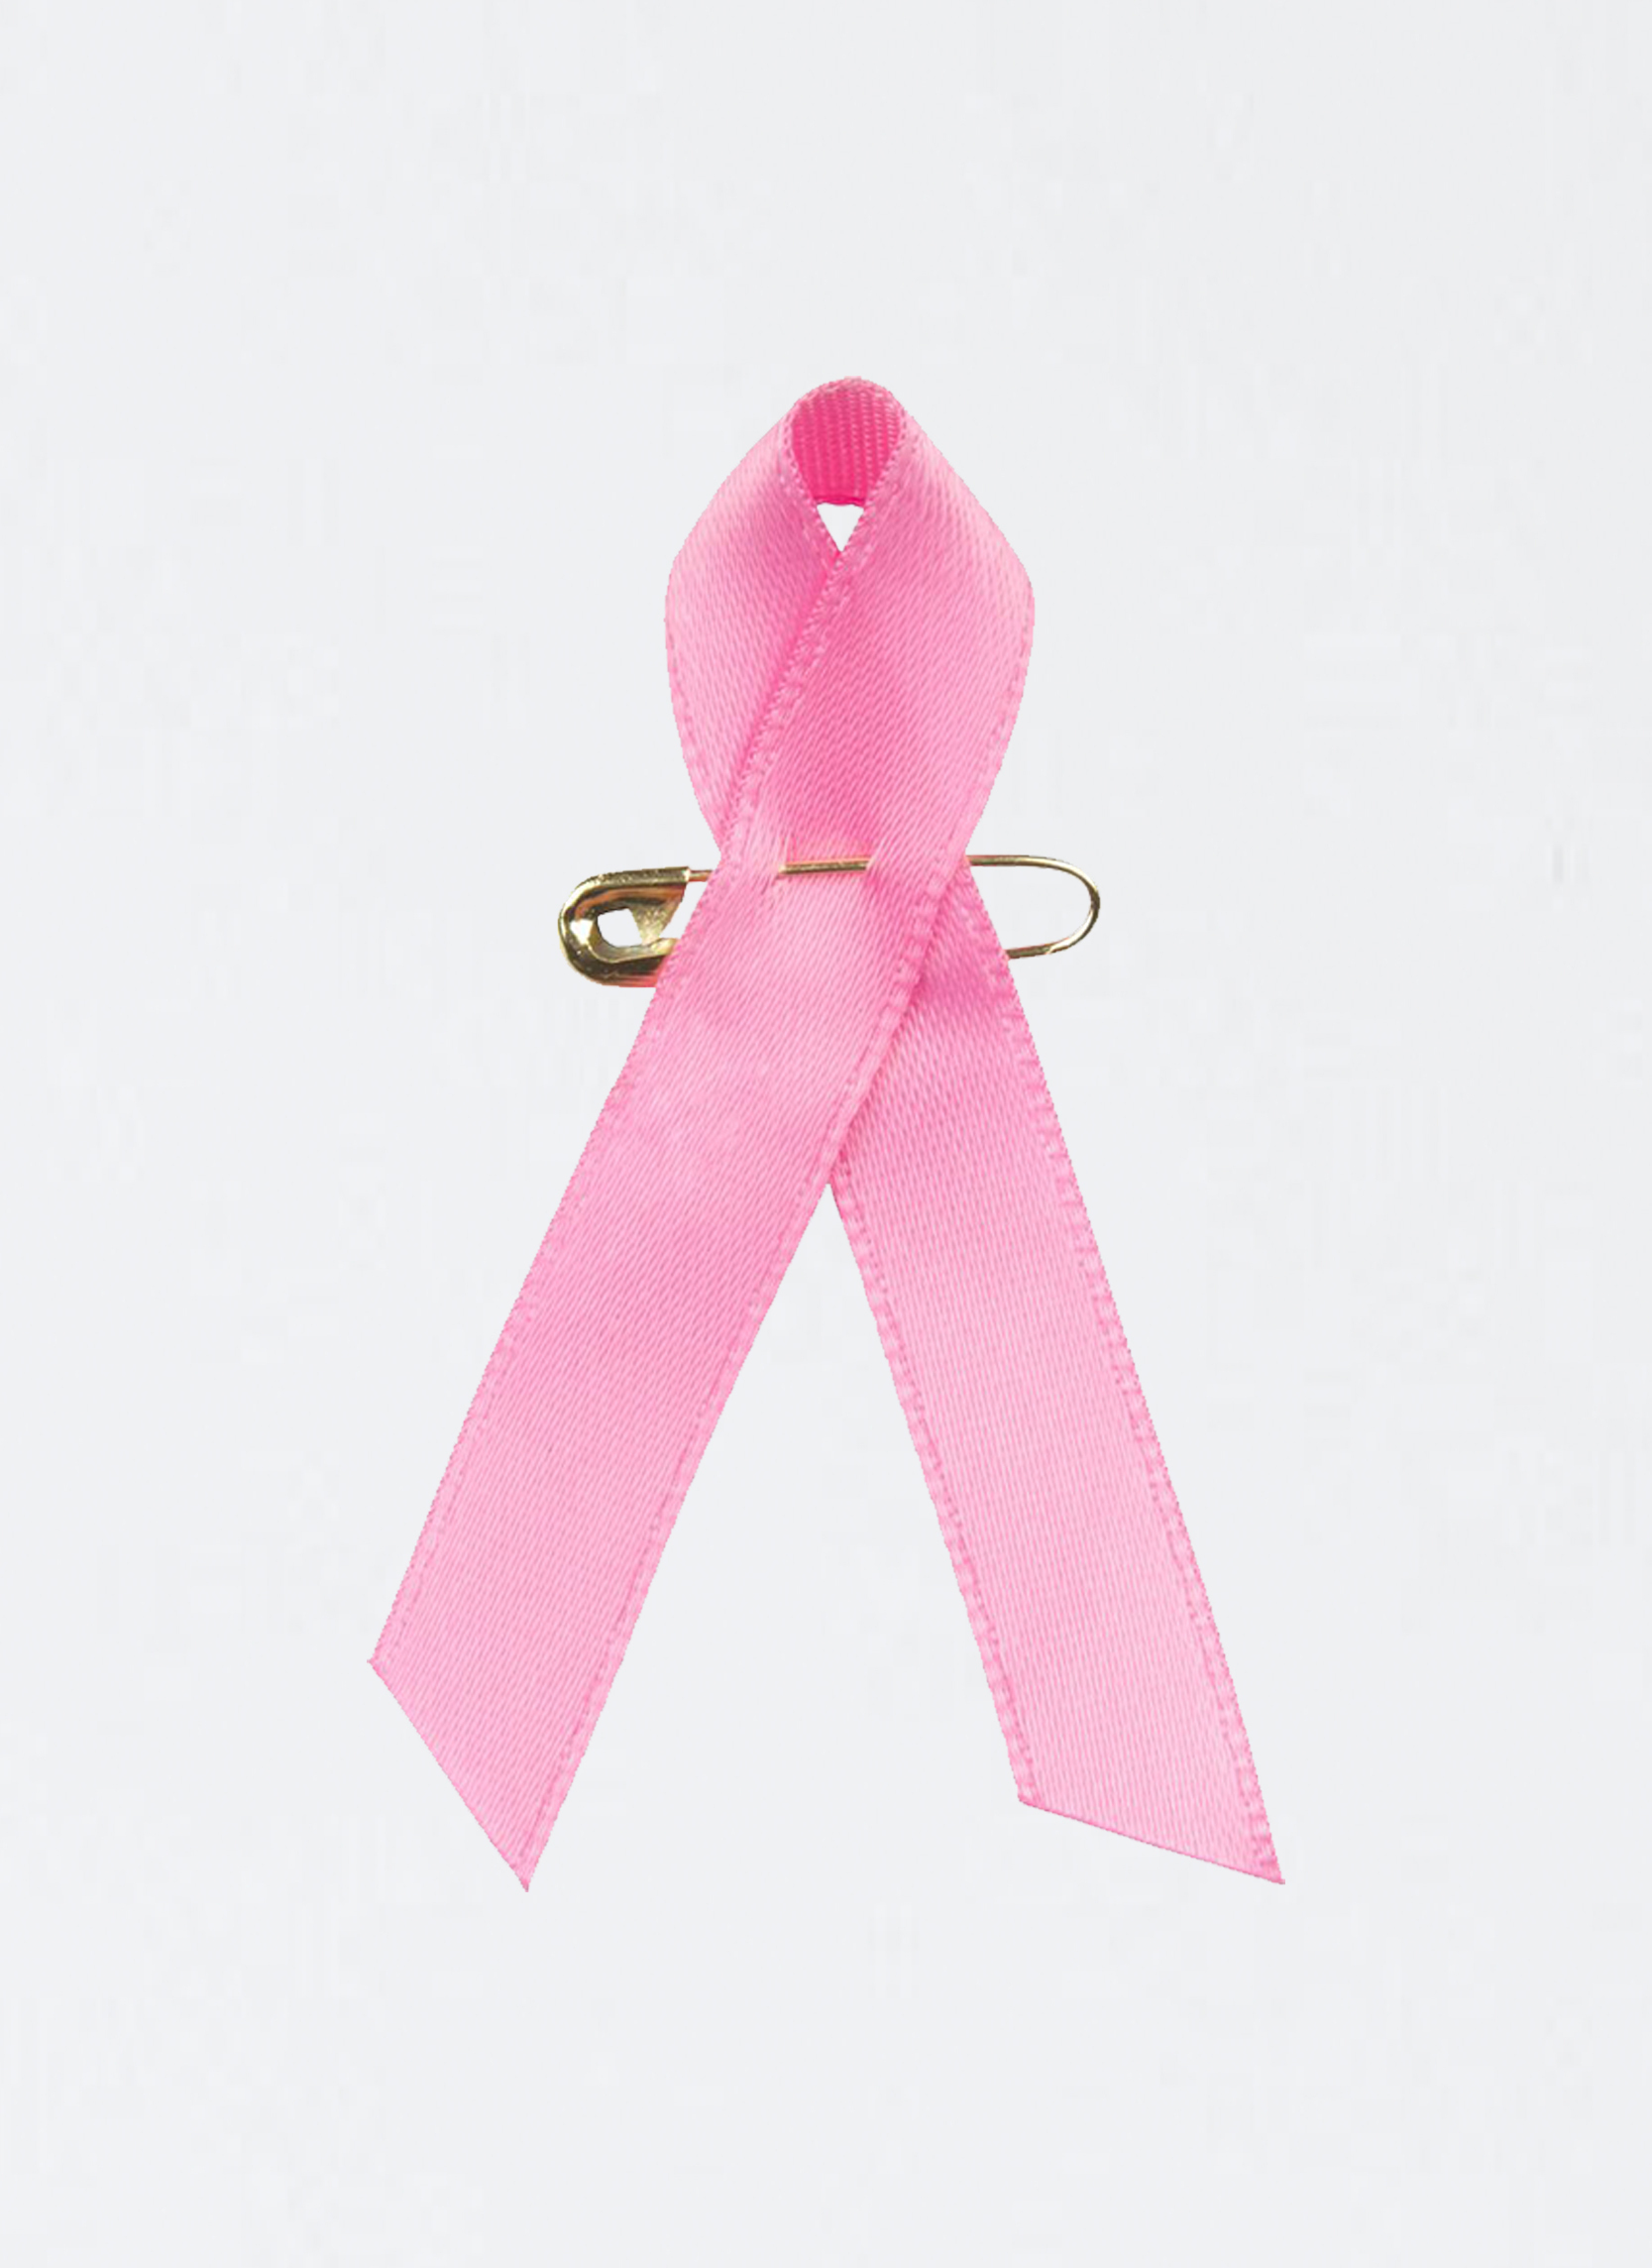 Pink ribbon (The Swedish Breast Cancer Association)